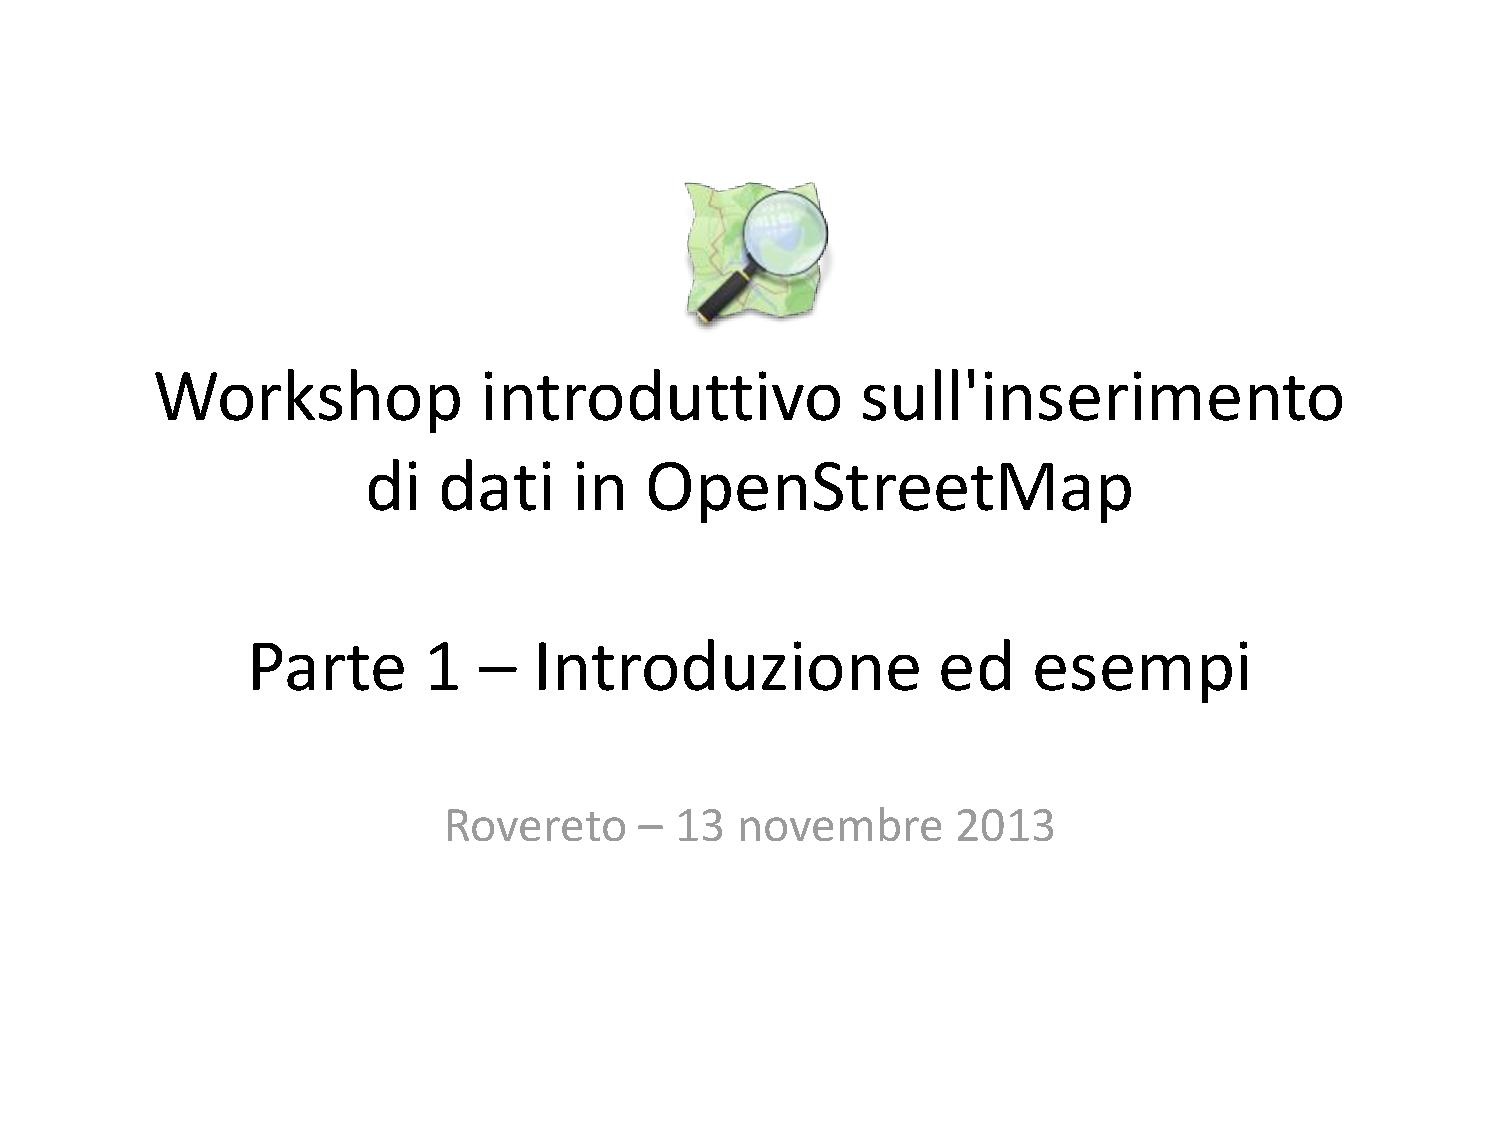 Workshop osm.pdf